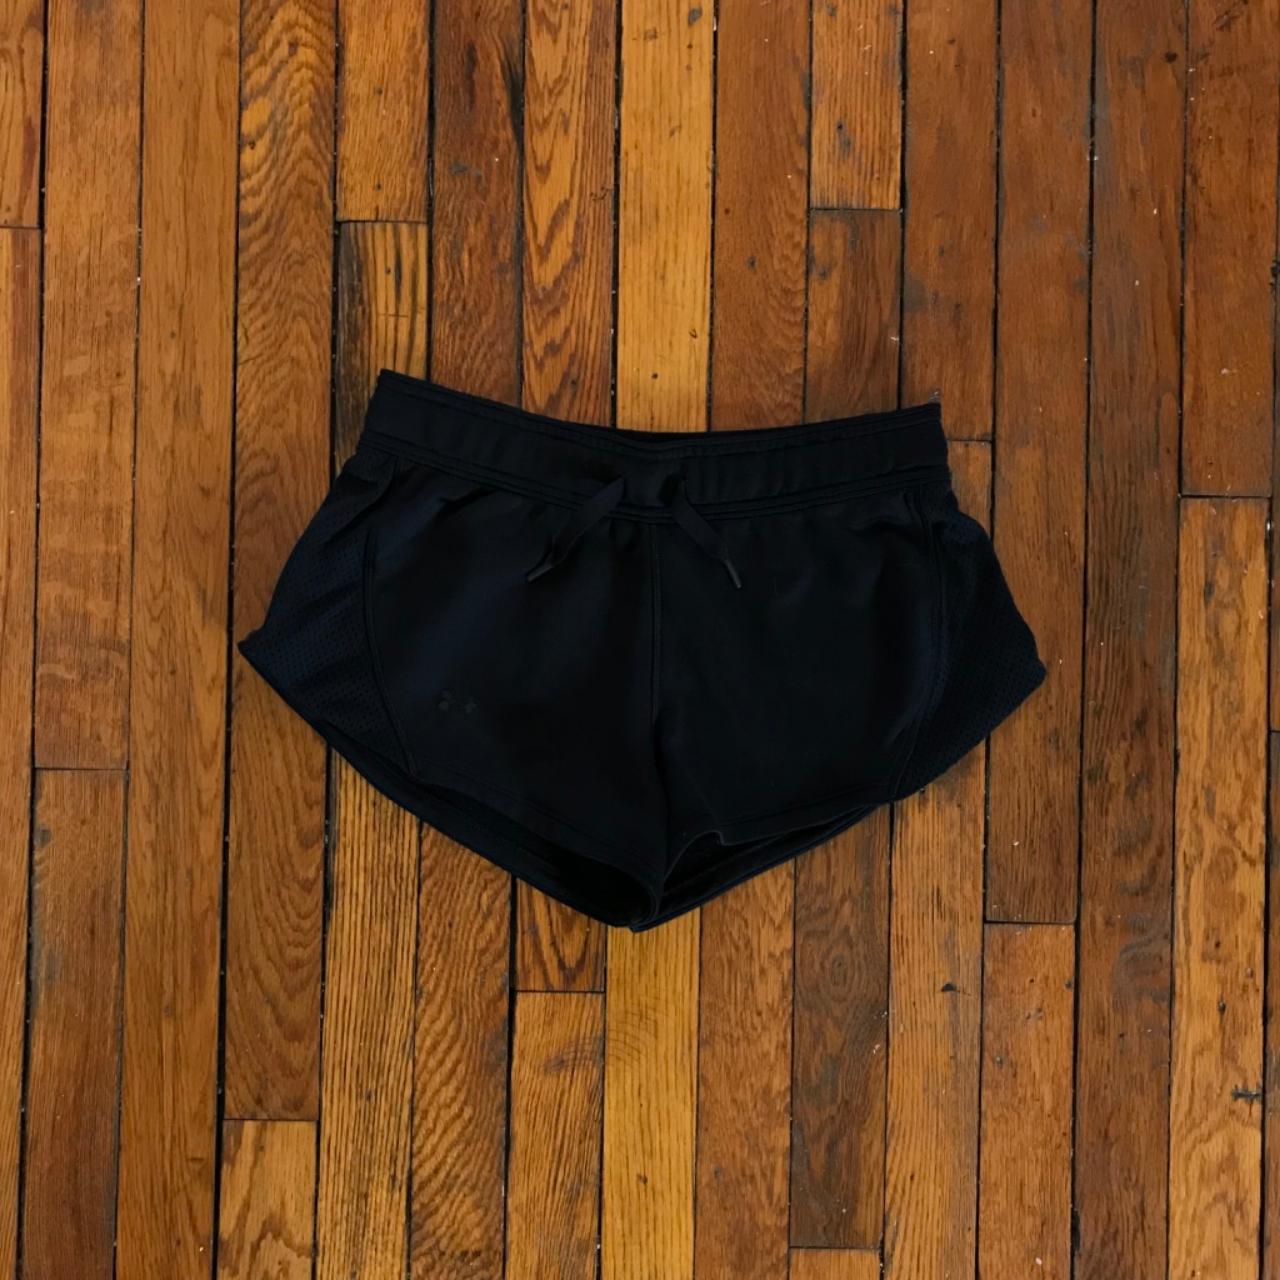 Under Armour Women's Black Shorts (2)